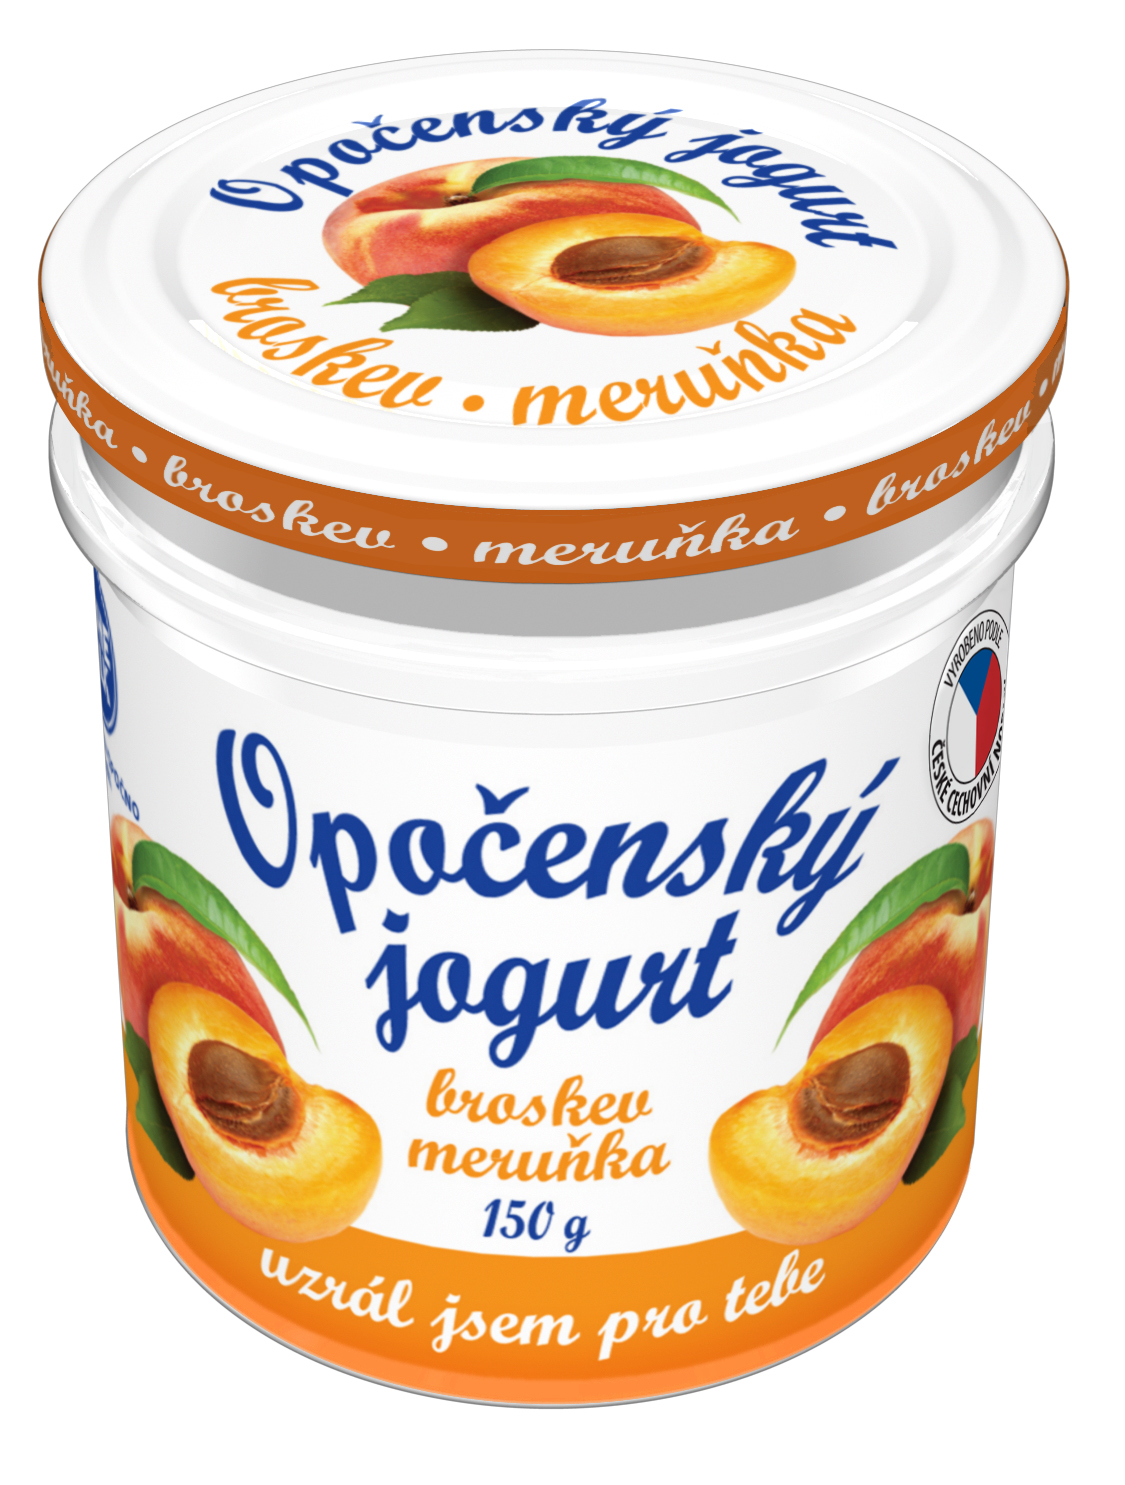 Opočenský jogurt BROSKEV/MERUŇKA